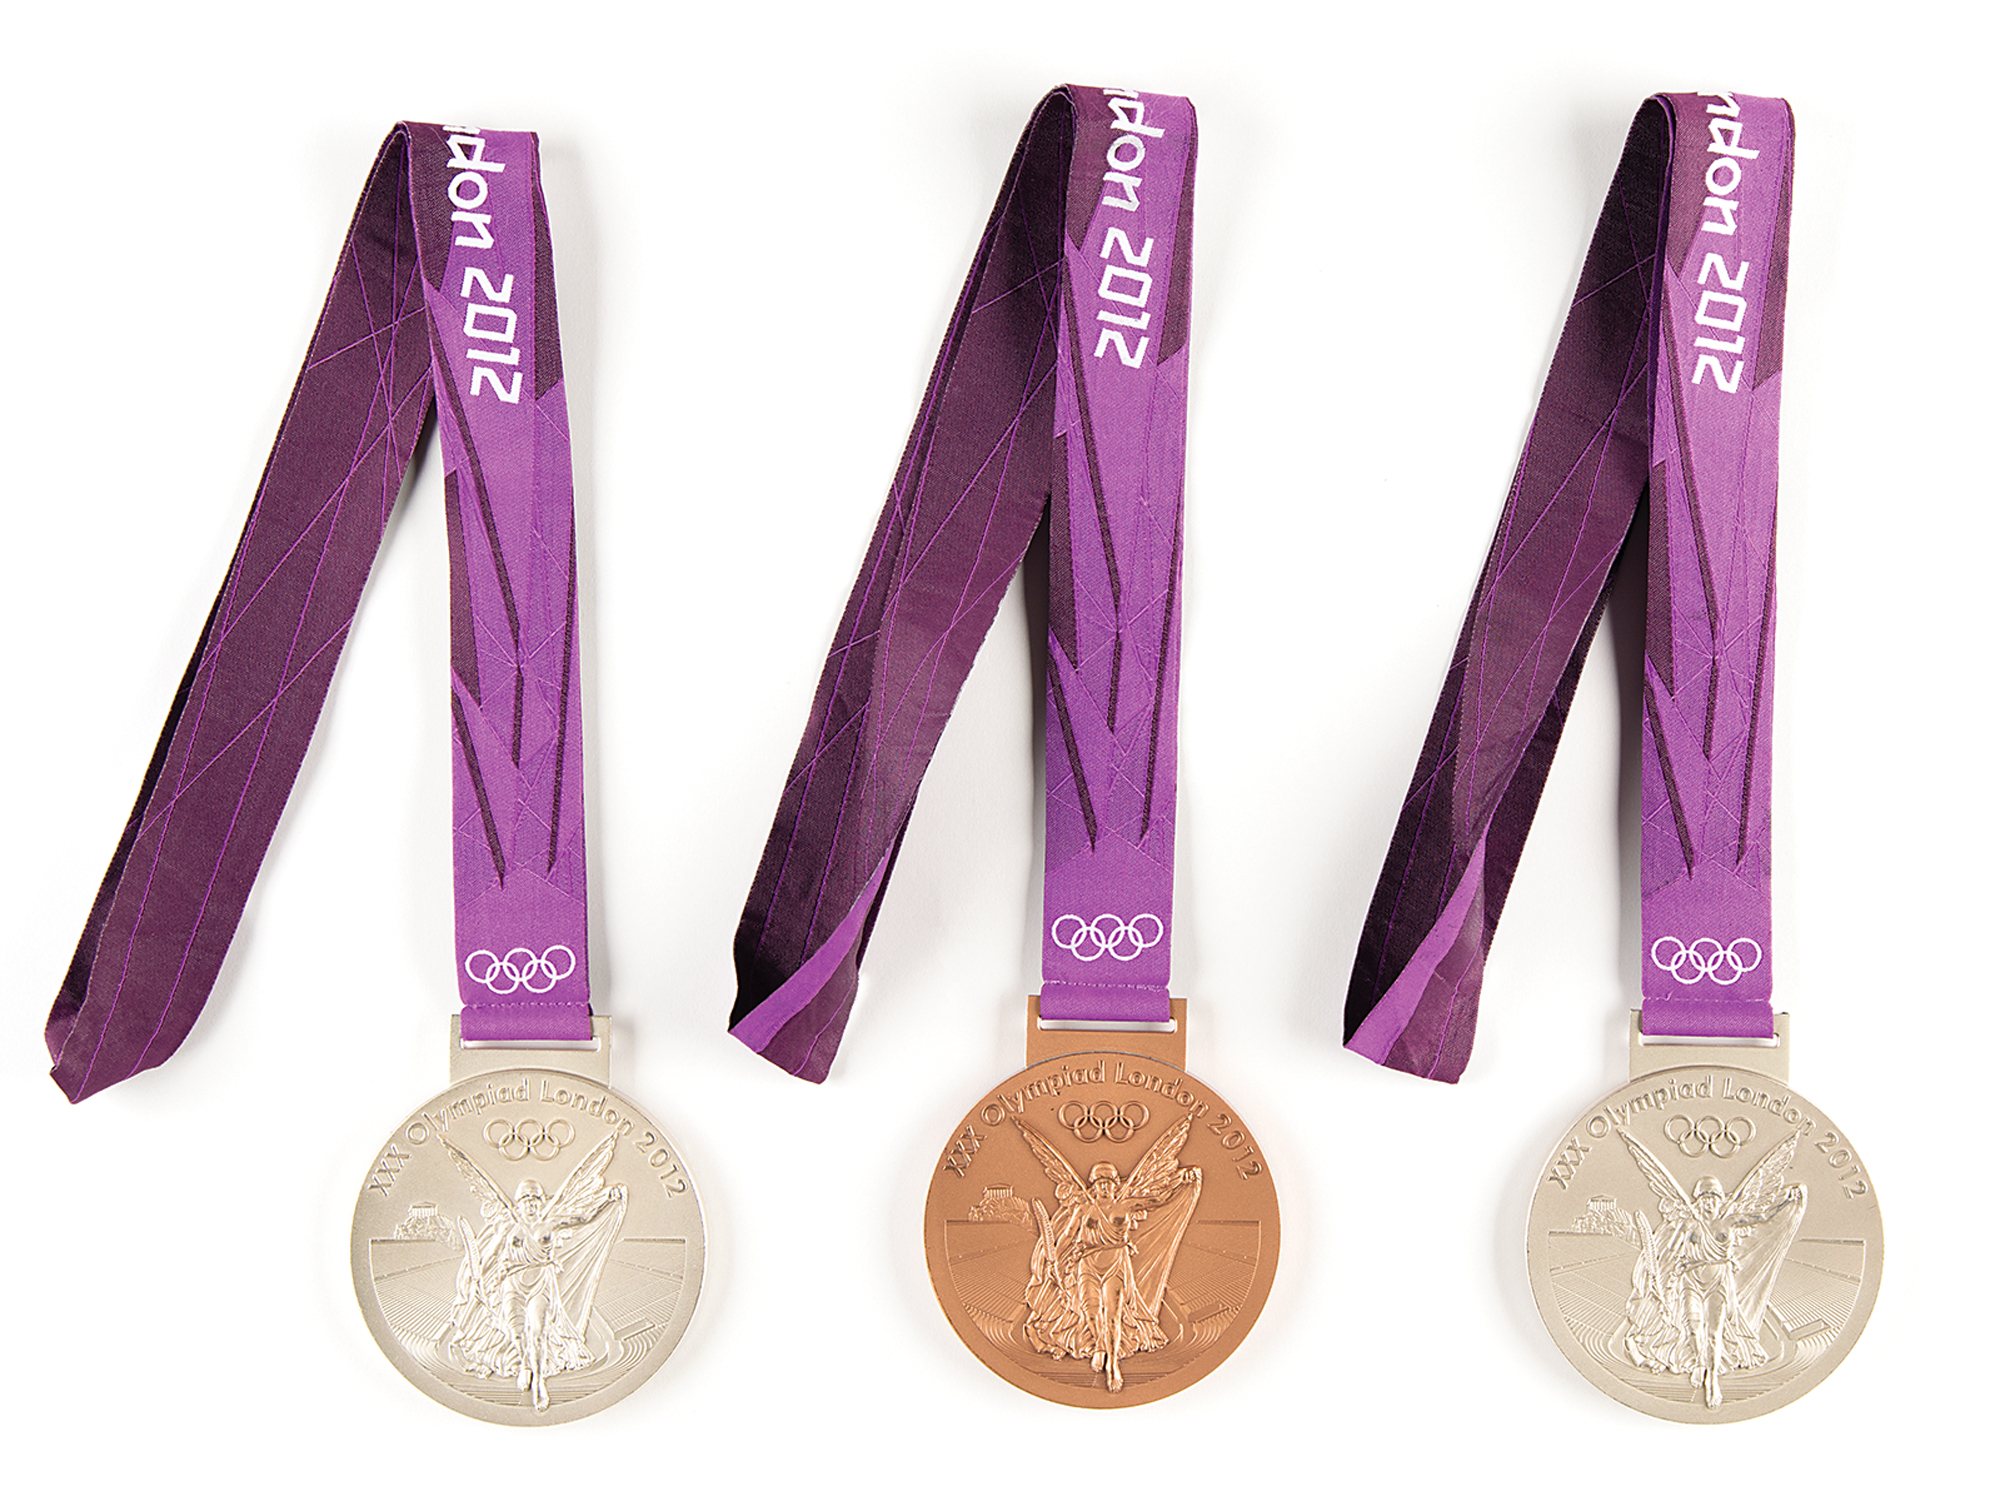 Lot #4039 Ryan Lochte's London 2012 Summer Olympics (2) Silver Winner's Medals and (1) Bronze Winner's Medal